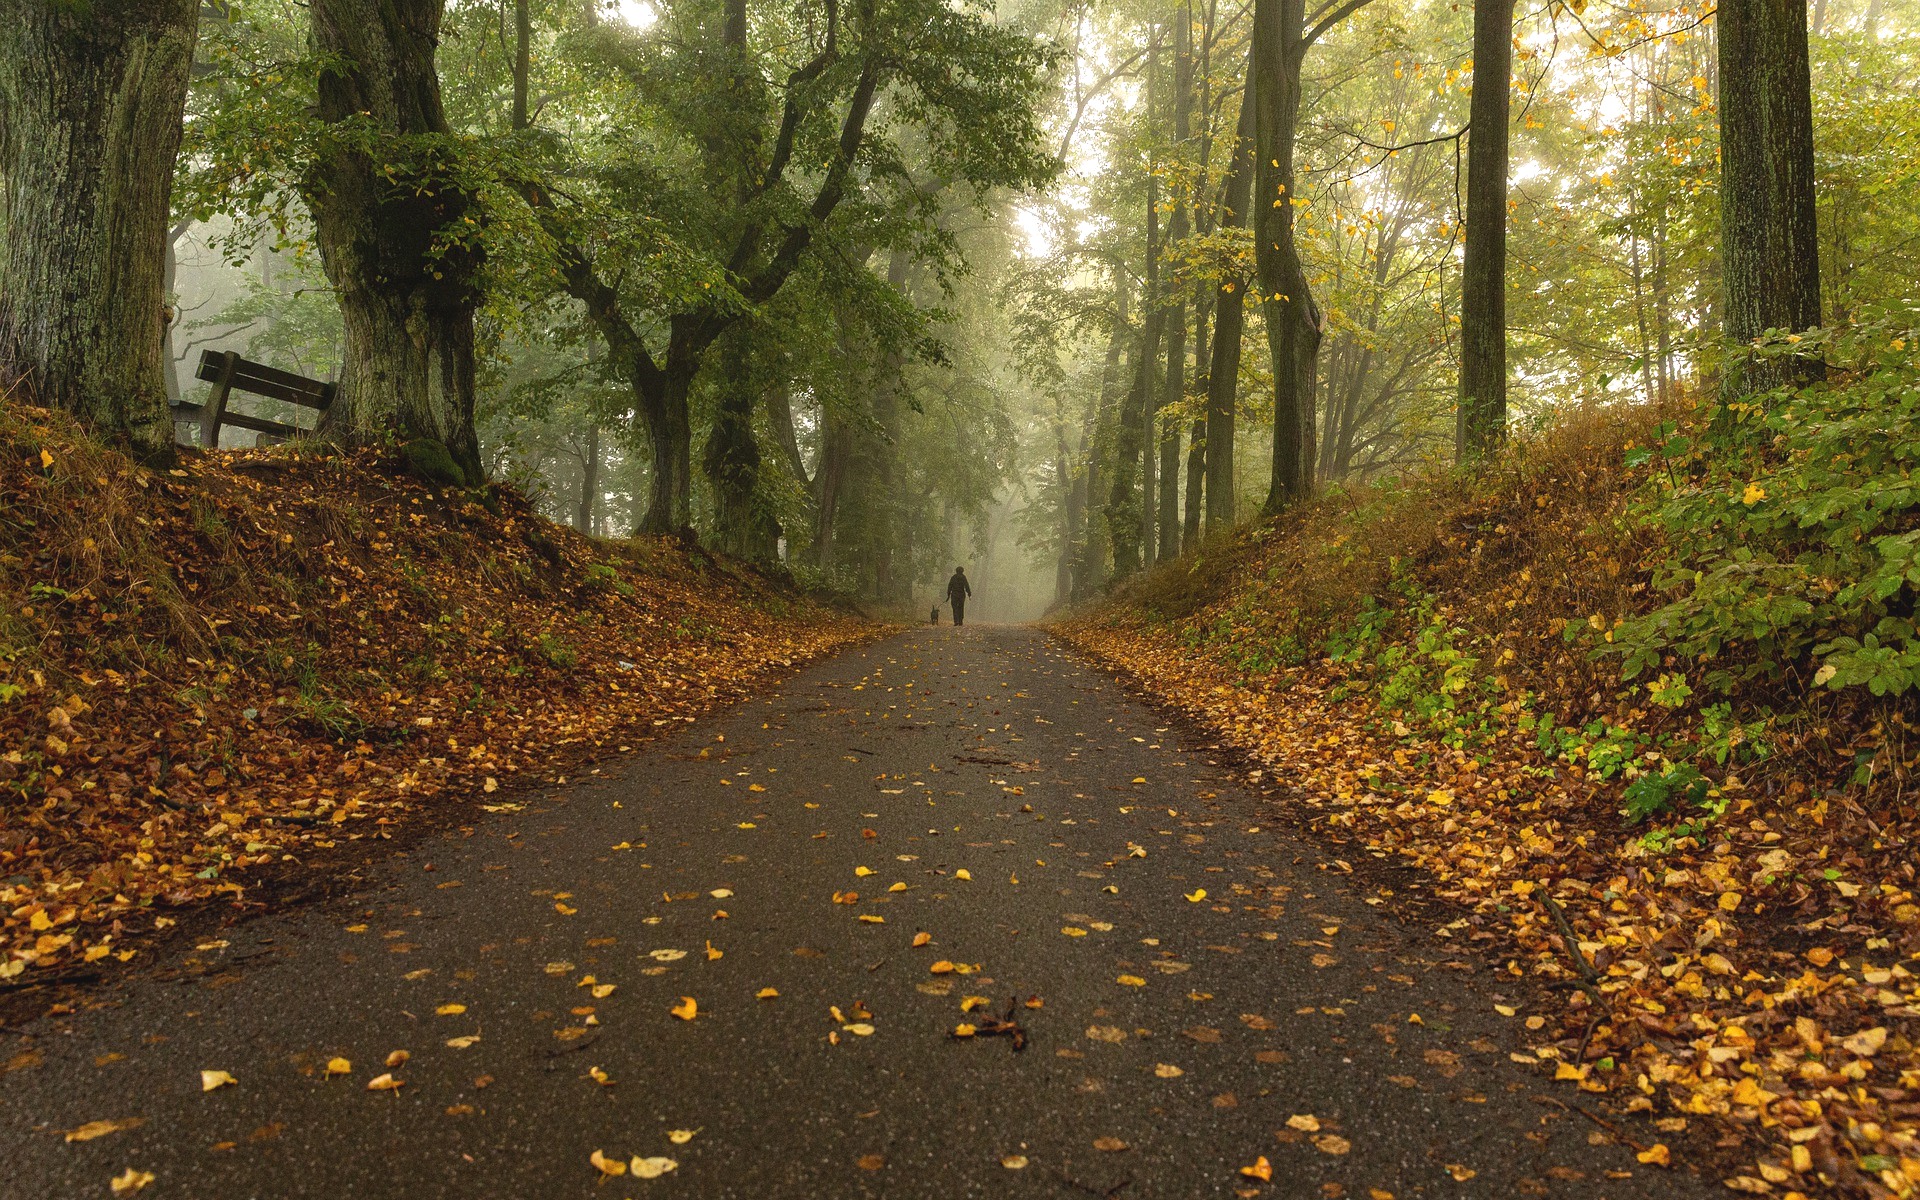 Осенняя аллея. Дорога в лесу. Желтое дерево. Парк, осень, деревья, тропинка, аллея.